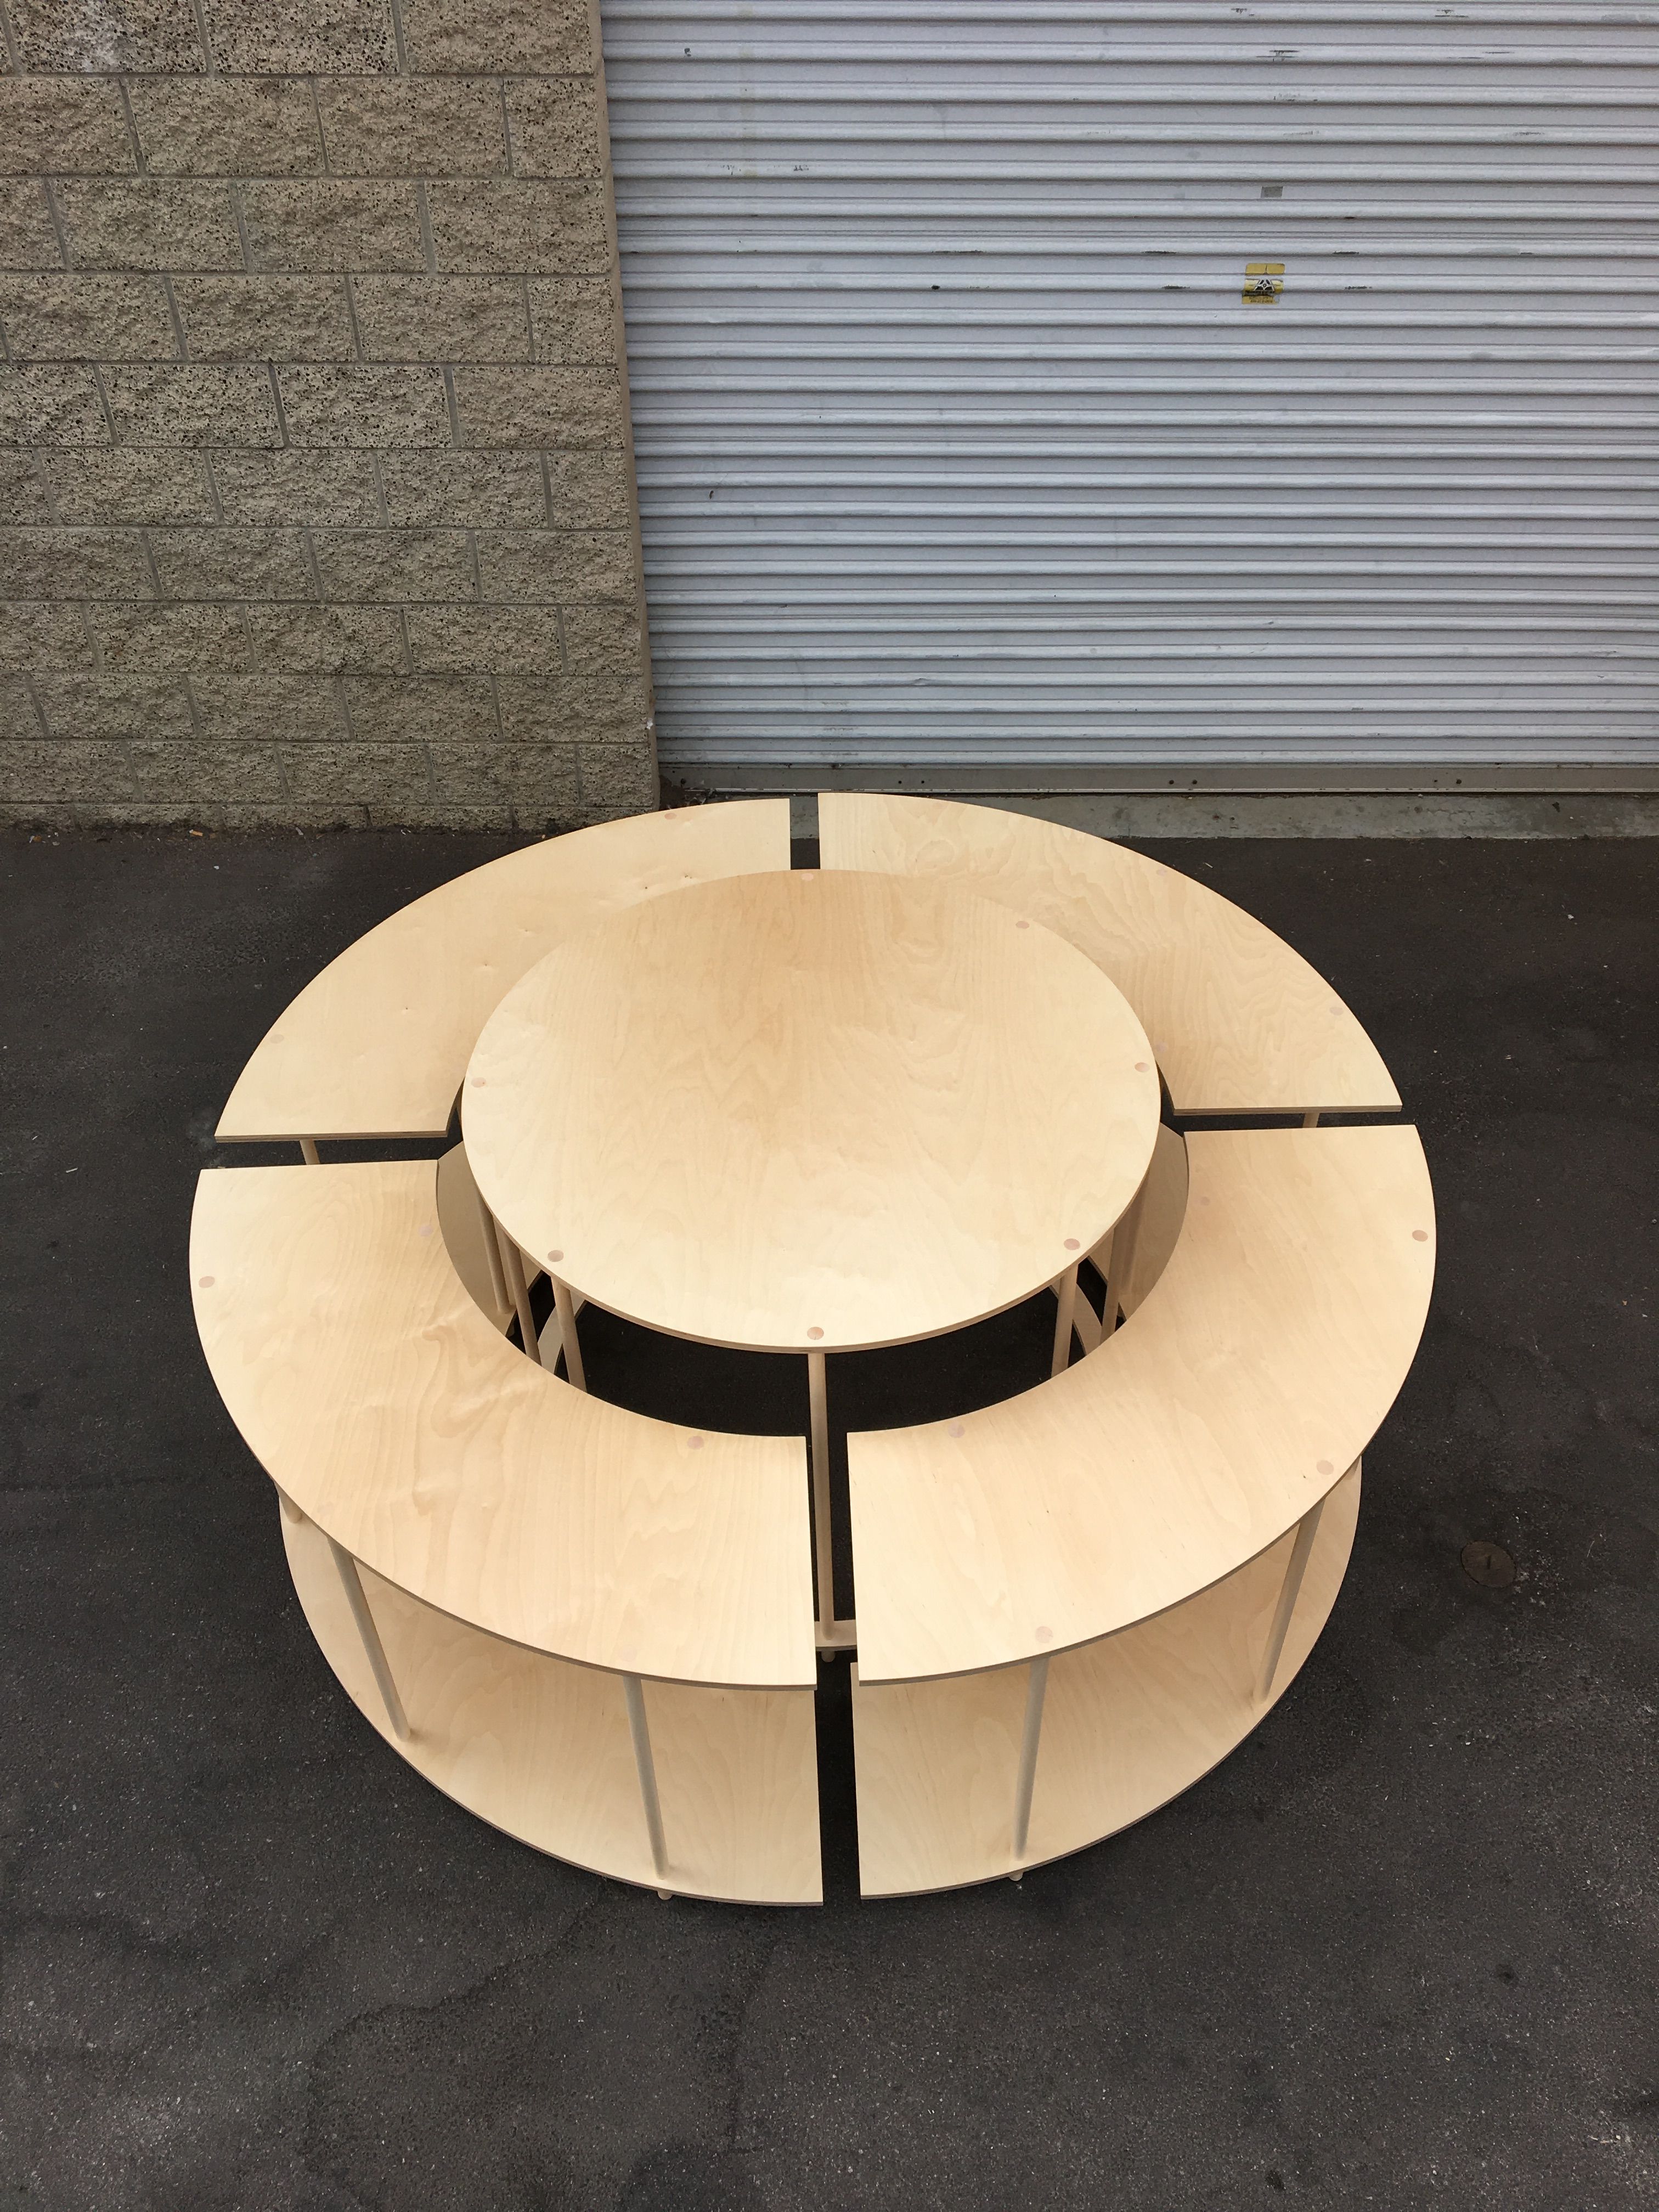  Display Table - Owl Bureau x Adidas / Abbott Kinney Festival product image 1